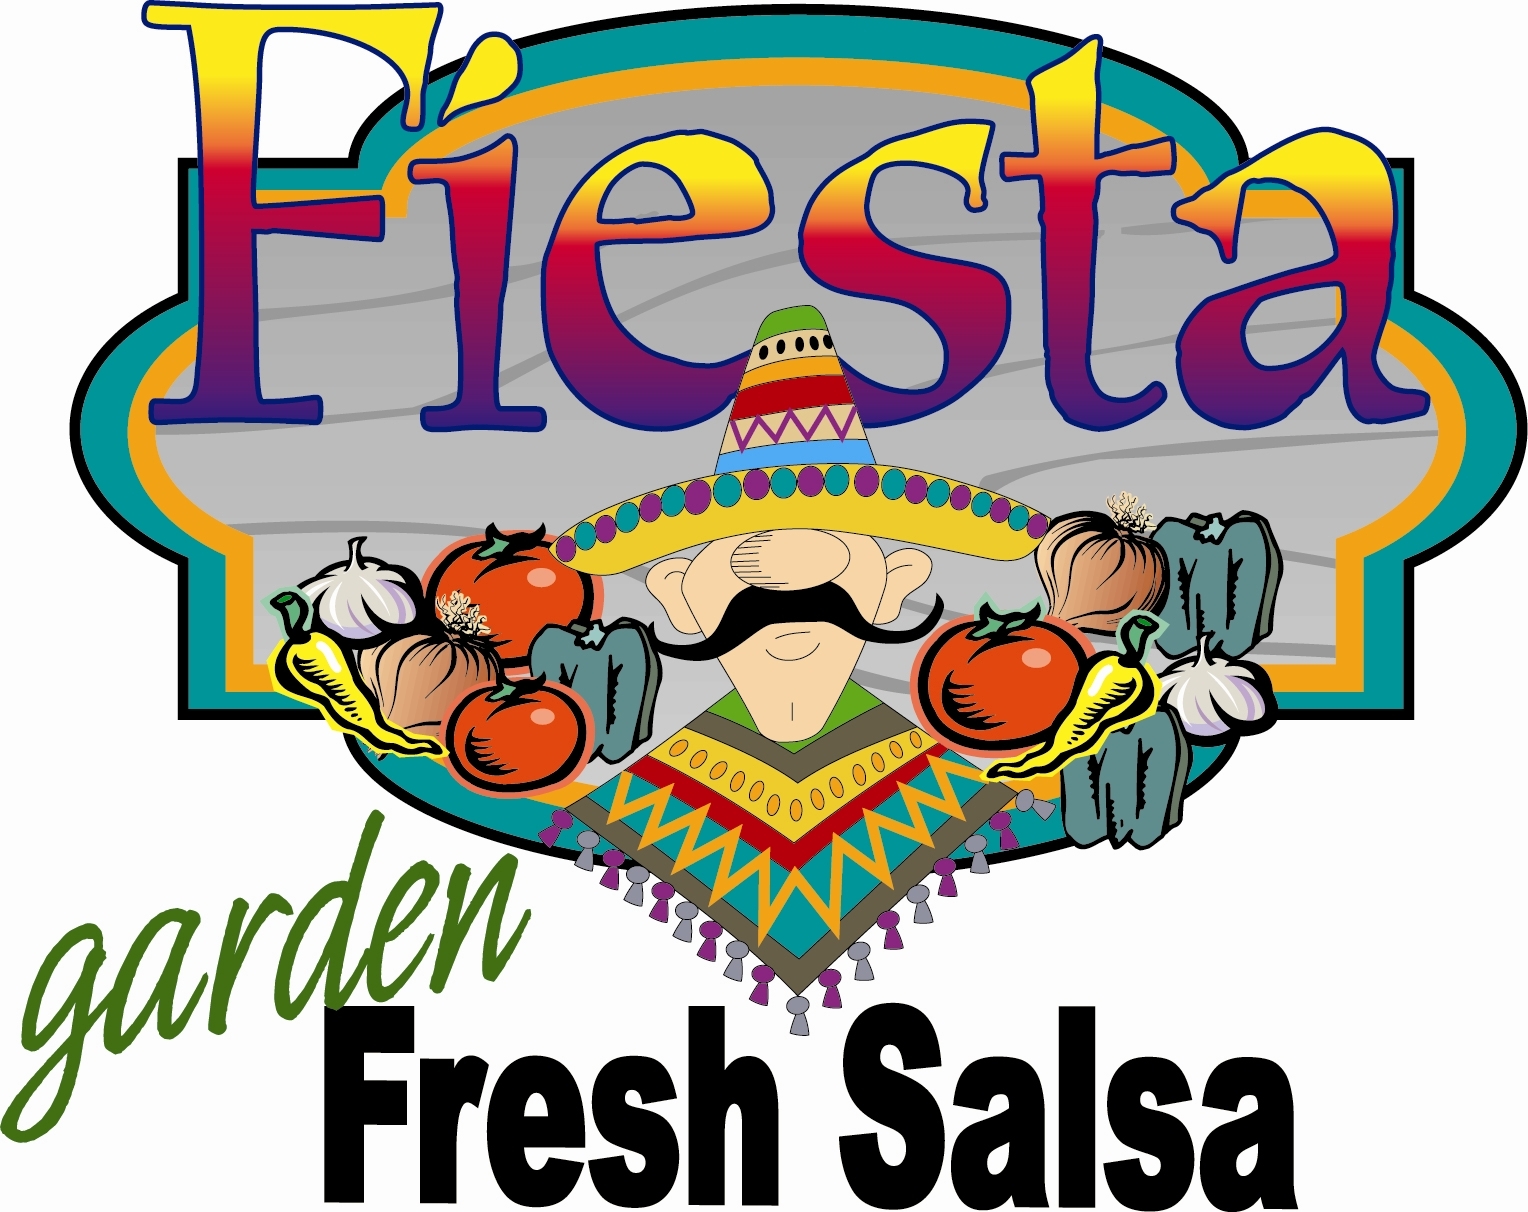 Fiesta Garden Fresh Salsa